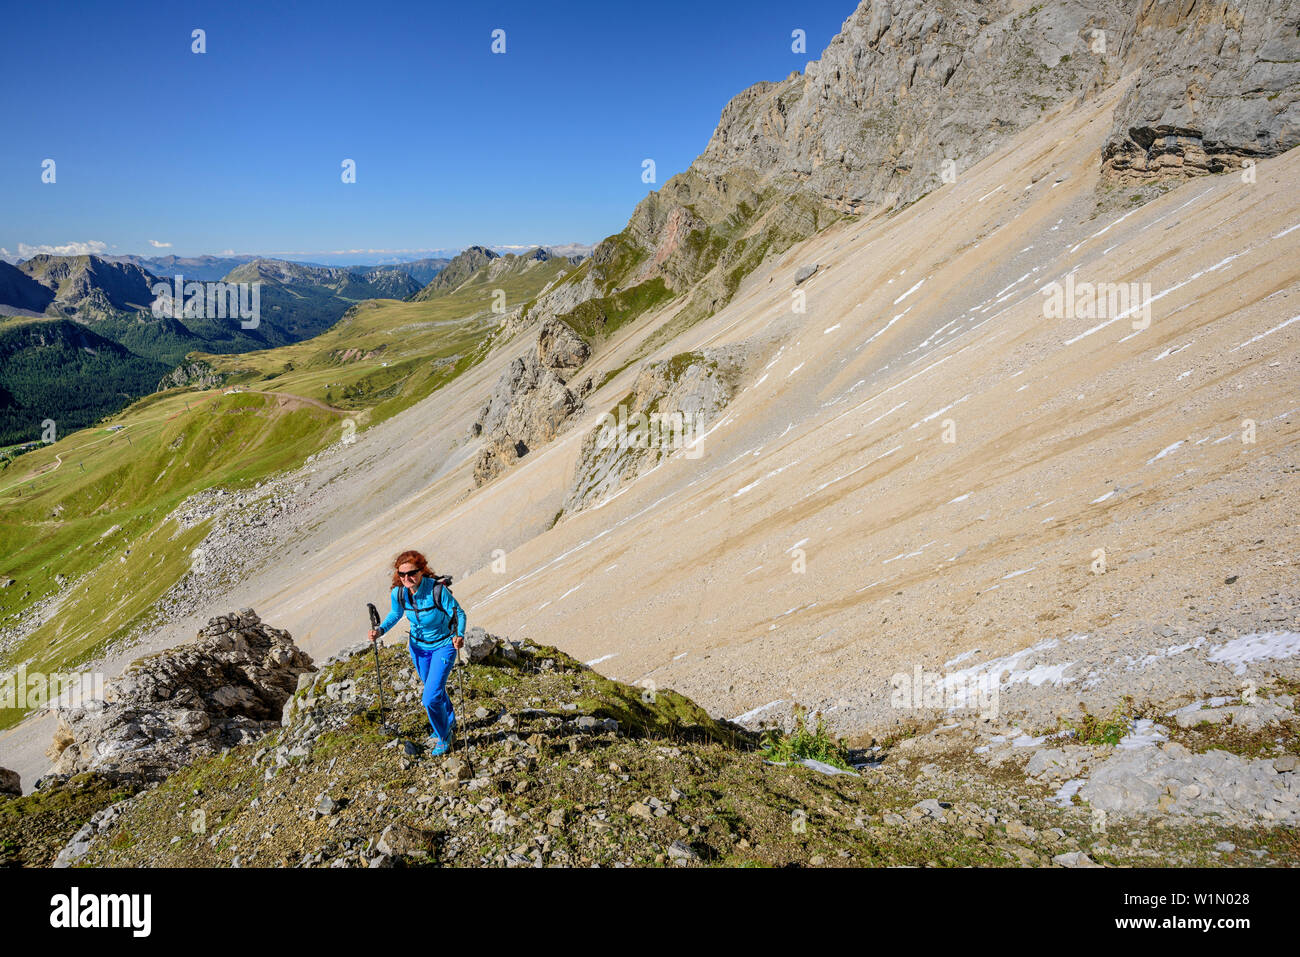 Woman hiking ascending towards Cima dell'Uomo, Cima dell'Uomo, Marmolada, Dolomites, UNESCO World Heritage Dolomites, Trentino, Italy Stock Photo